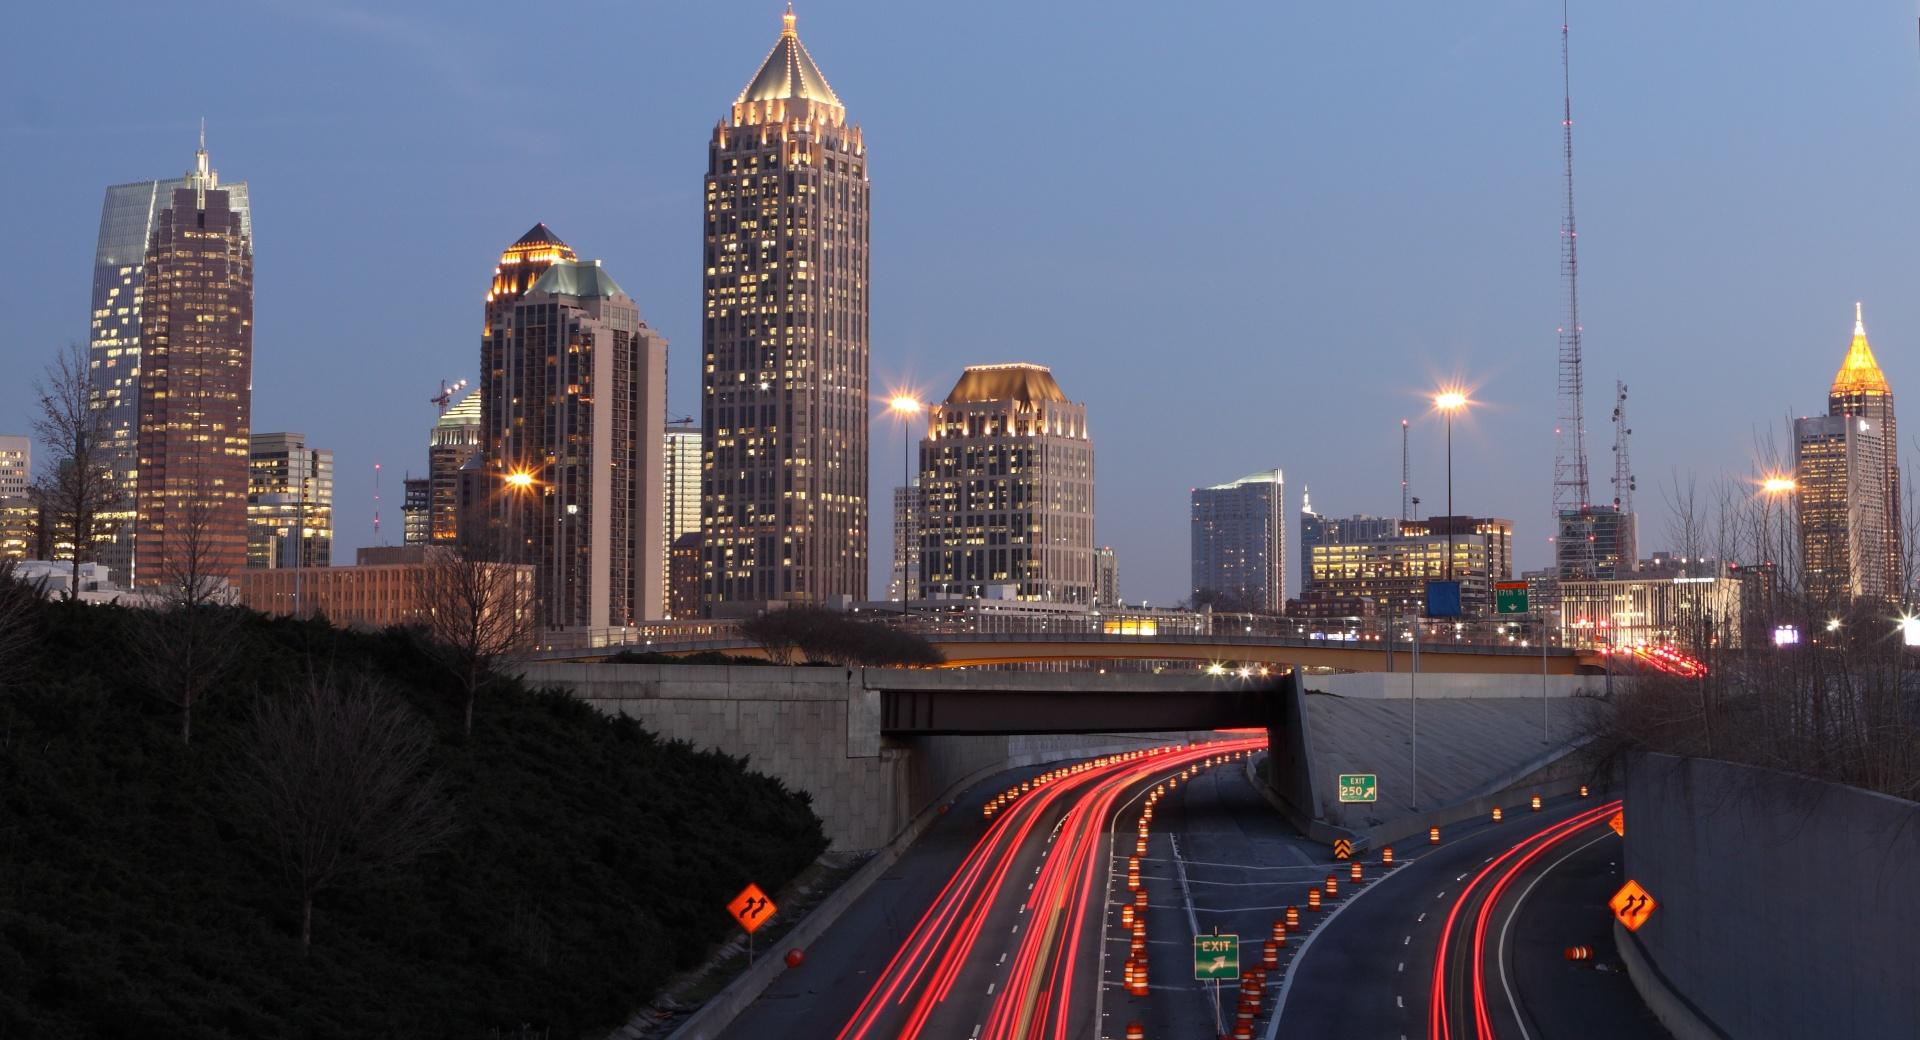 Atlanta City at 1280 x 960 size wallpapers HD quality